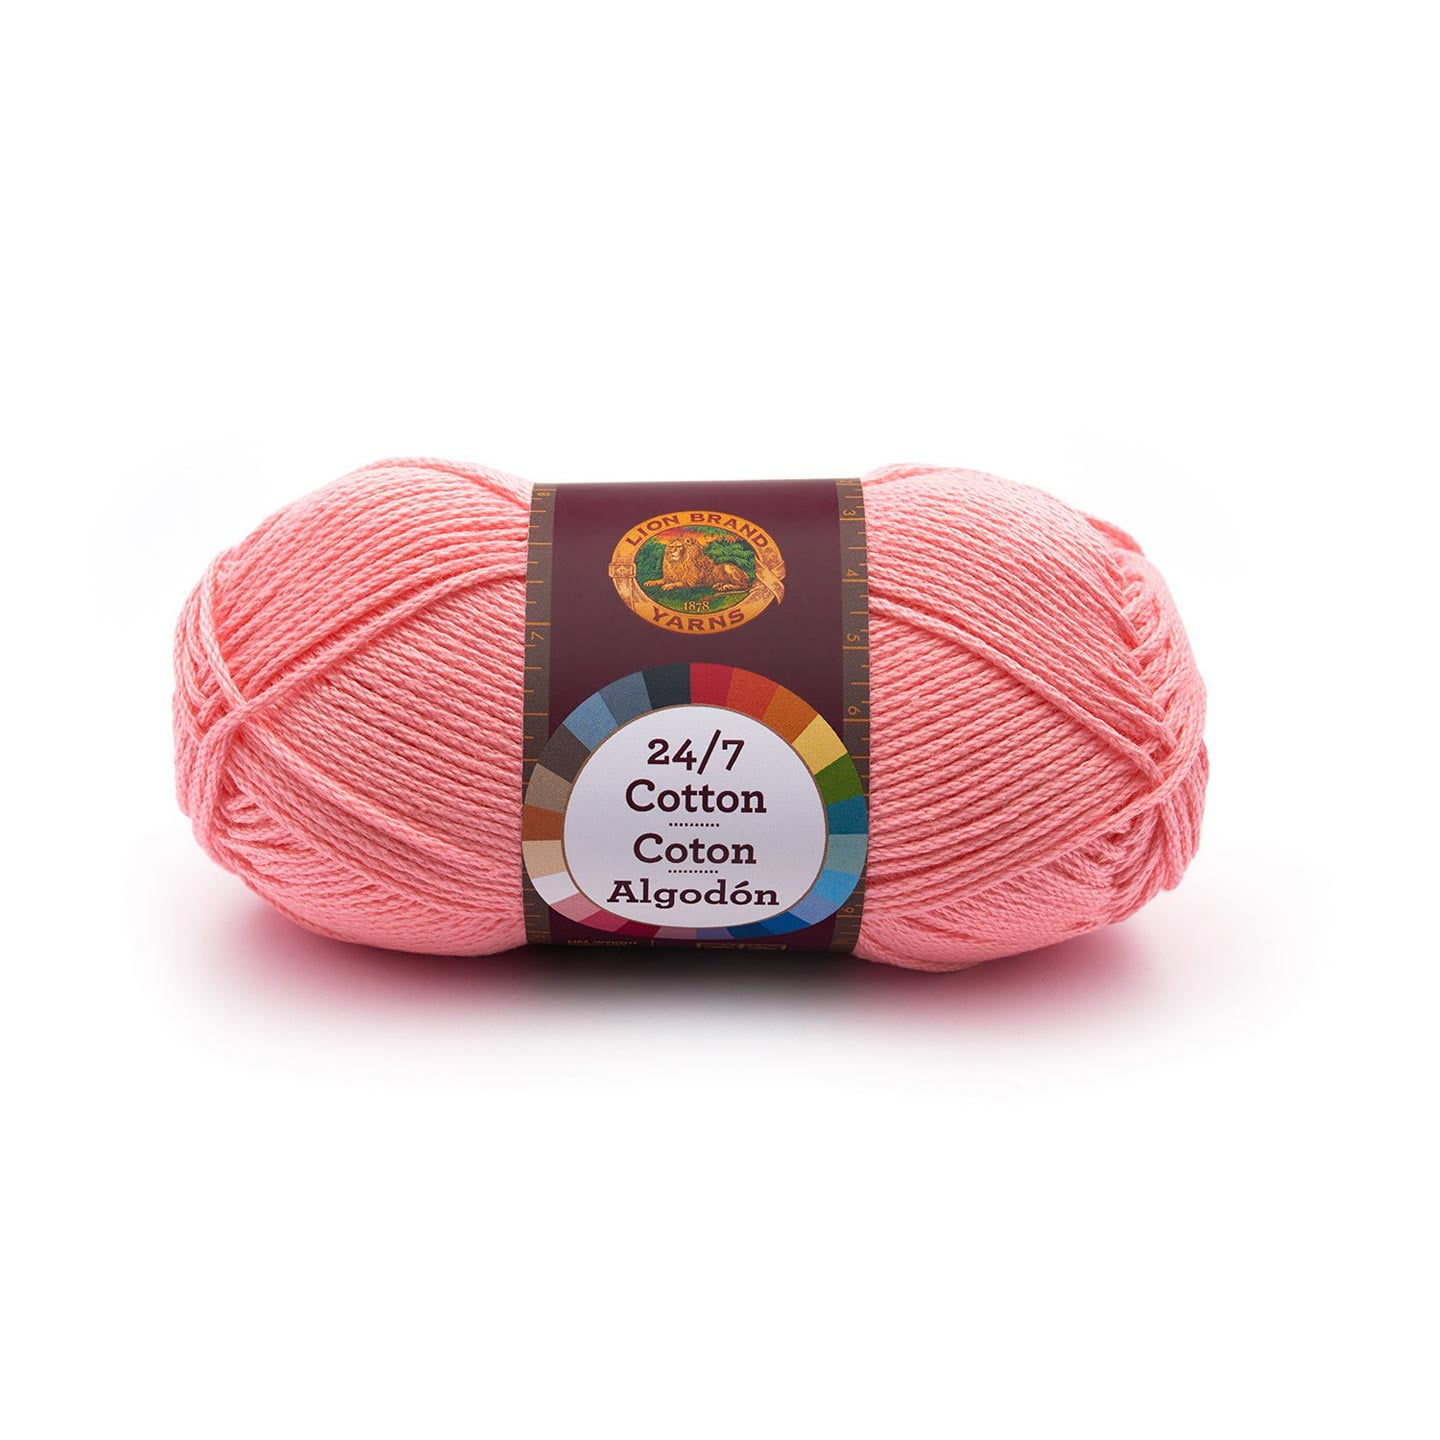 100% Cotton Mercerized Thread Yarn Knitting Crochet Mix Set 16 balls 400g/14oz 